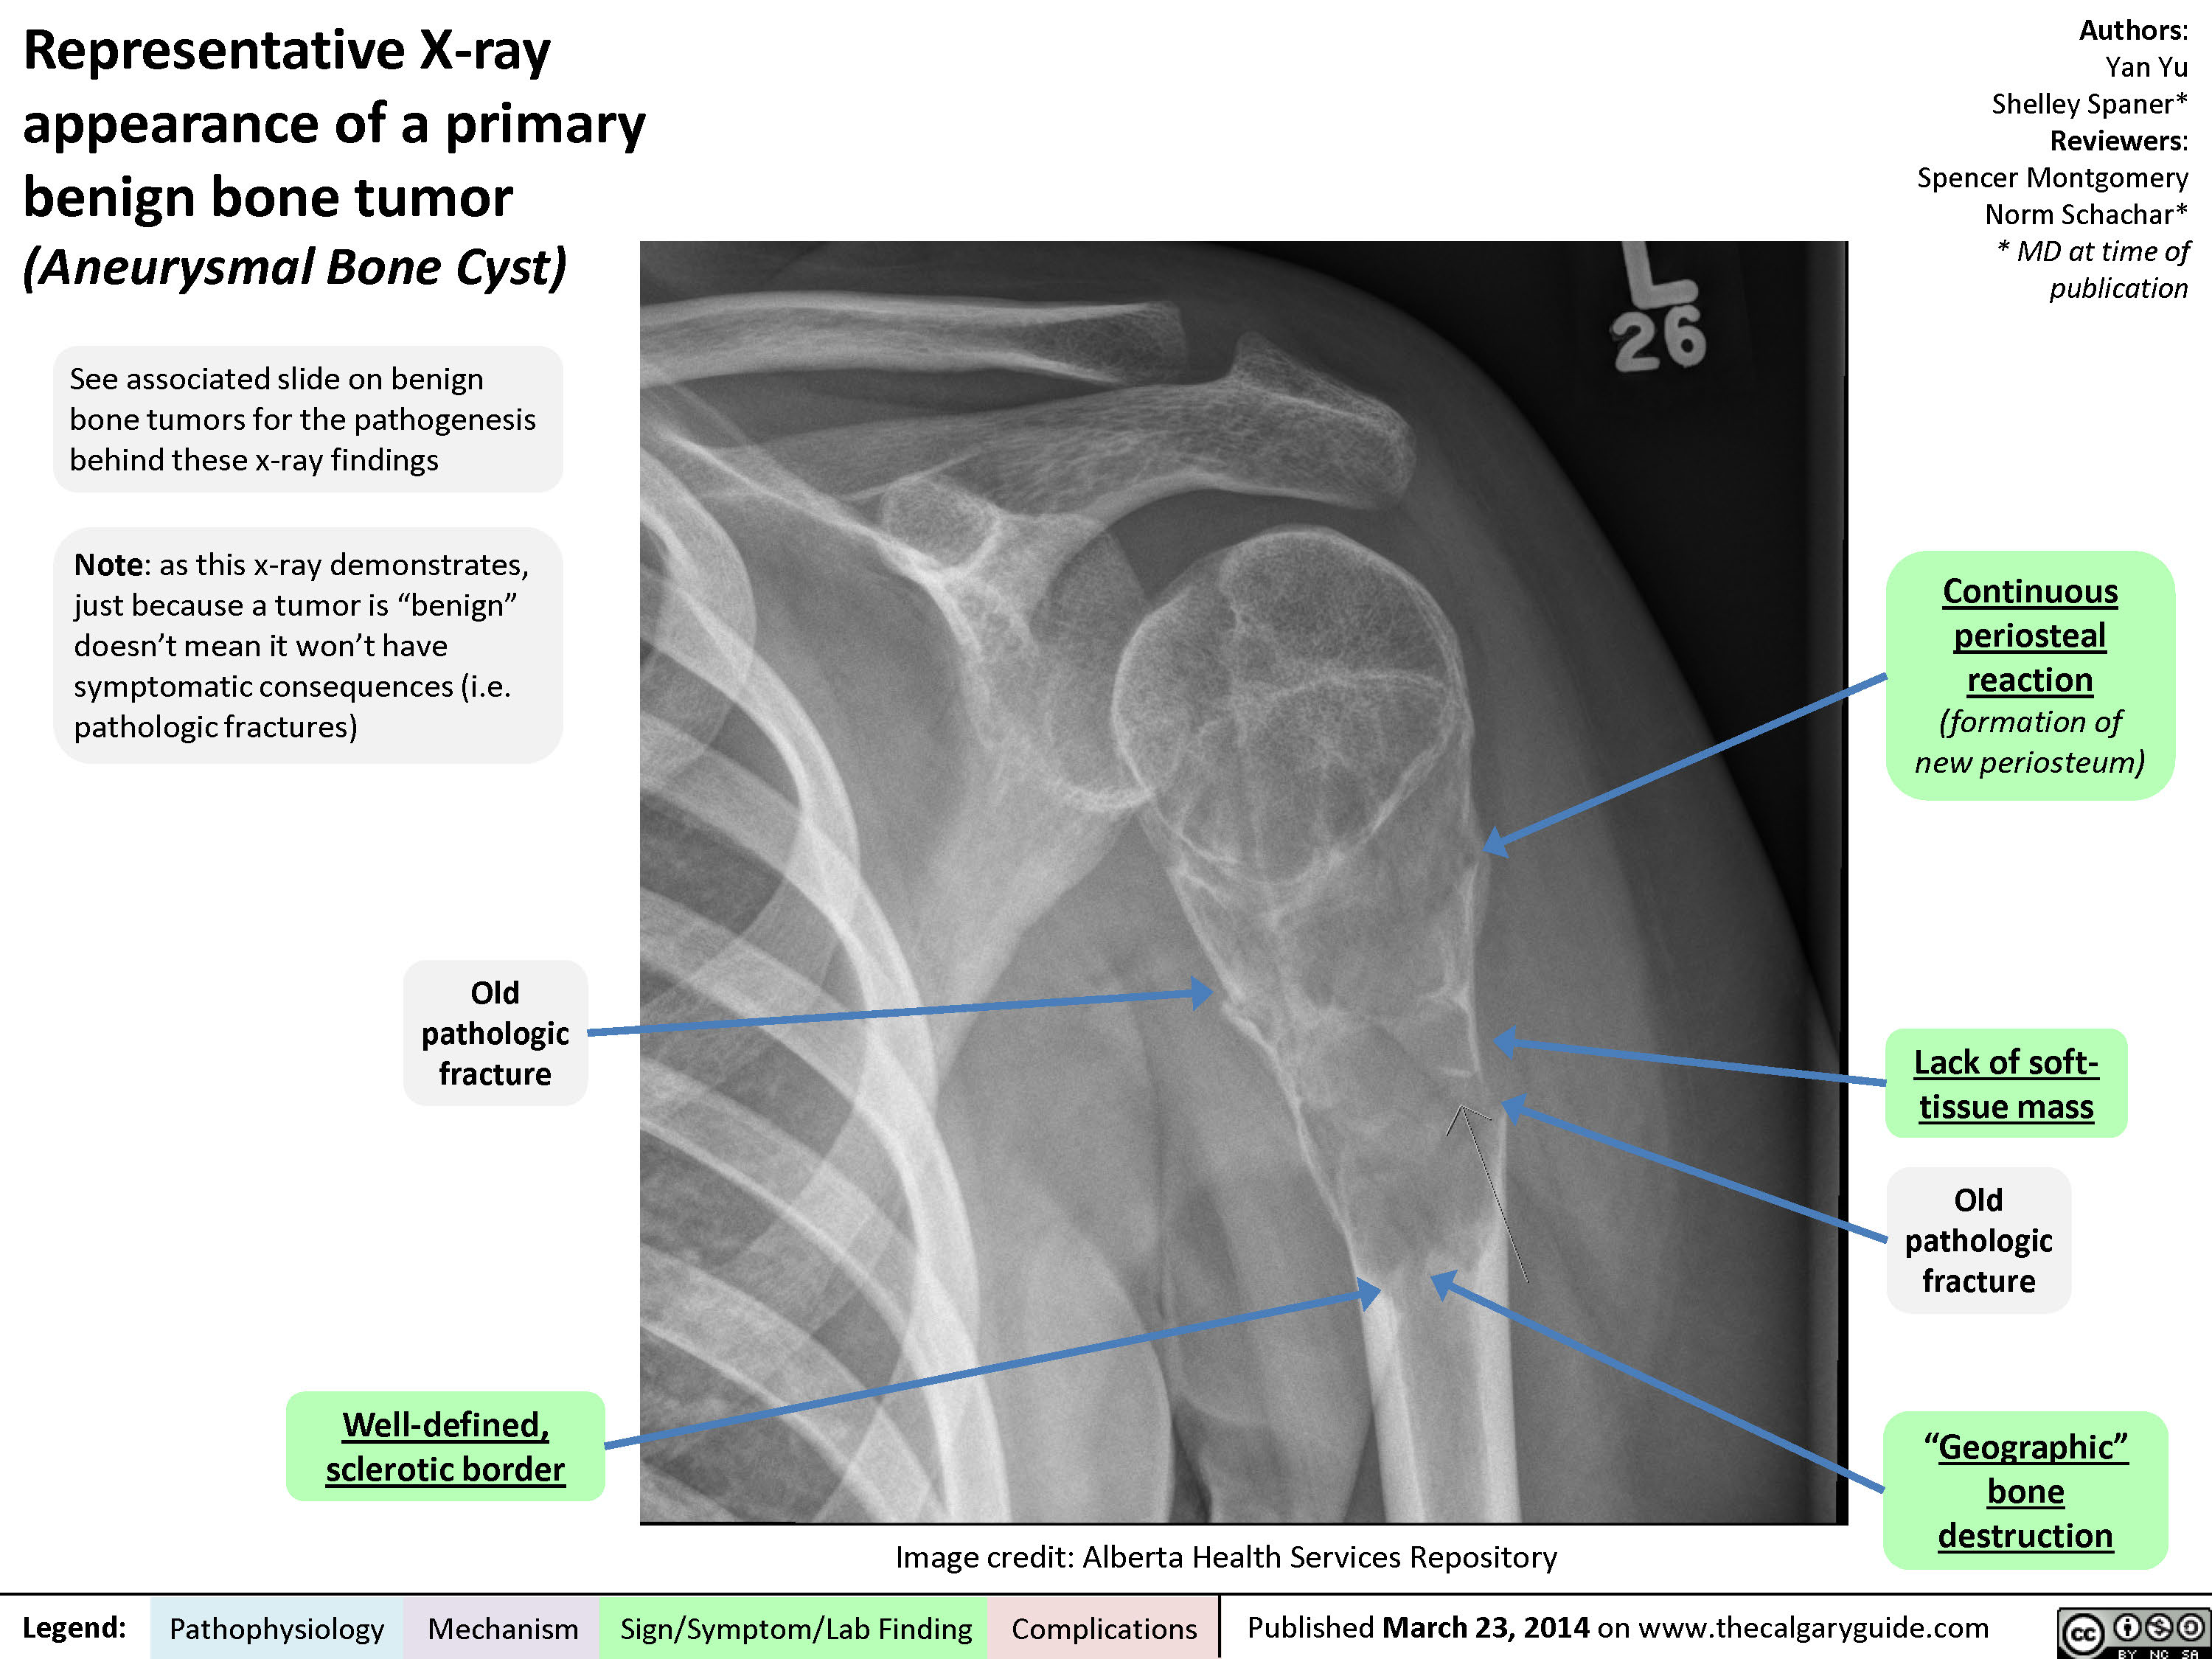 Representative X-ray appearance of a primary benign bone tumor